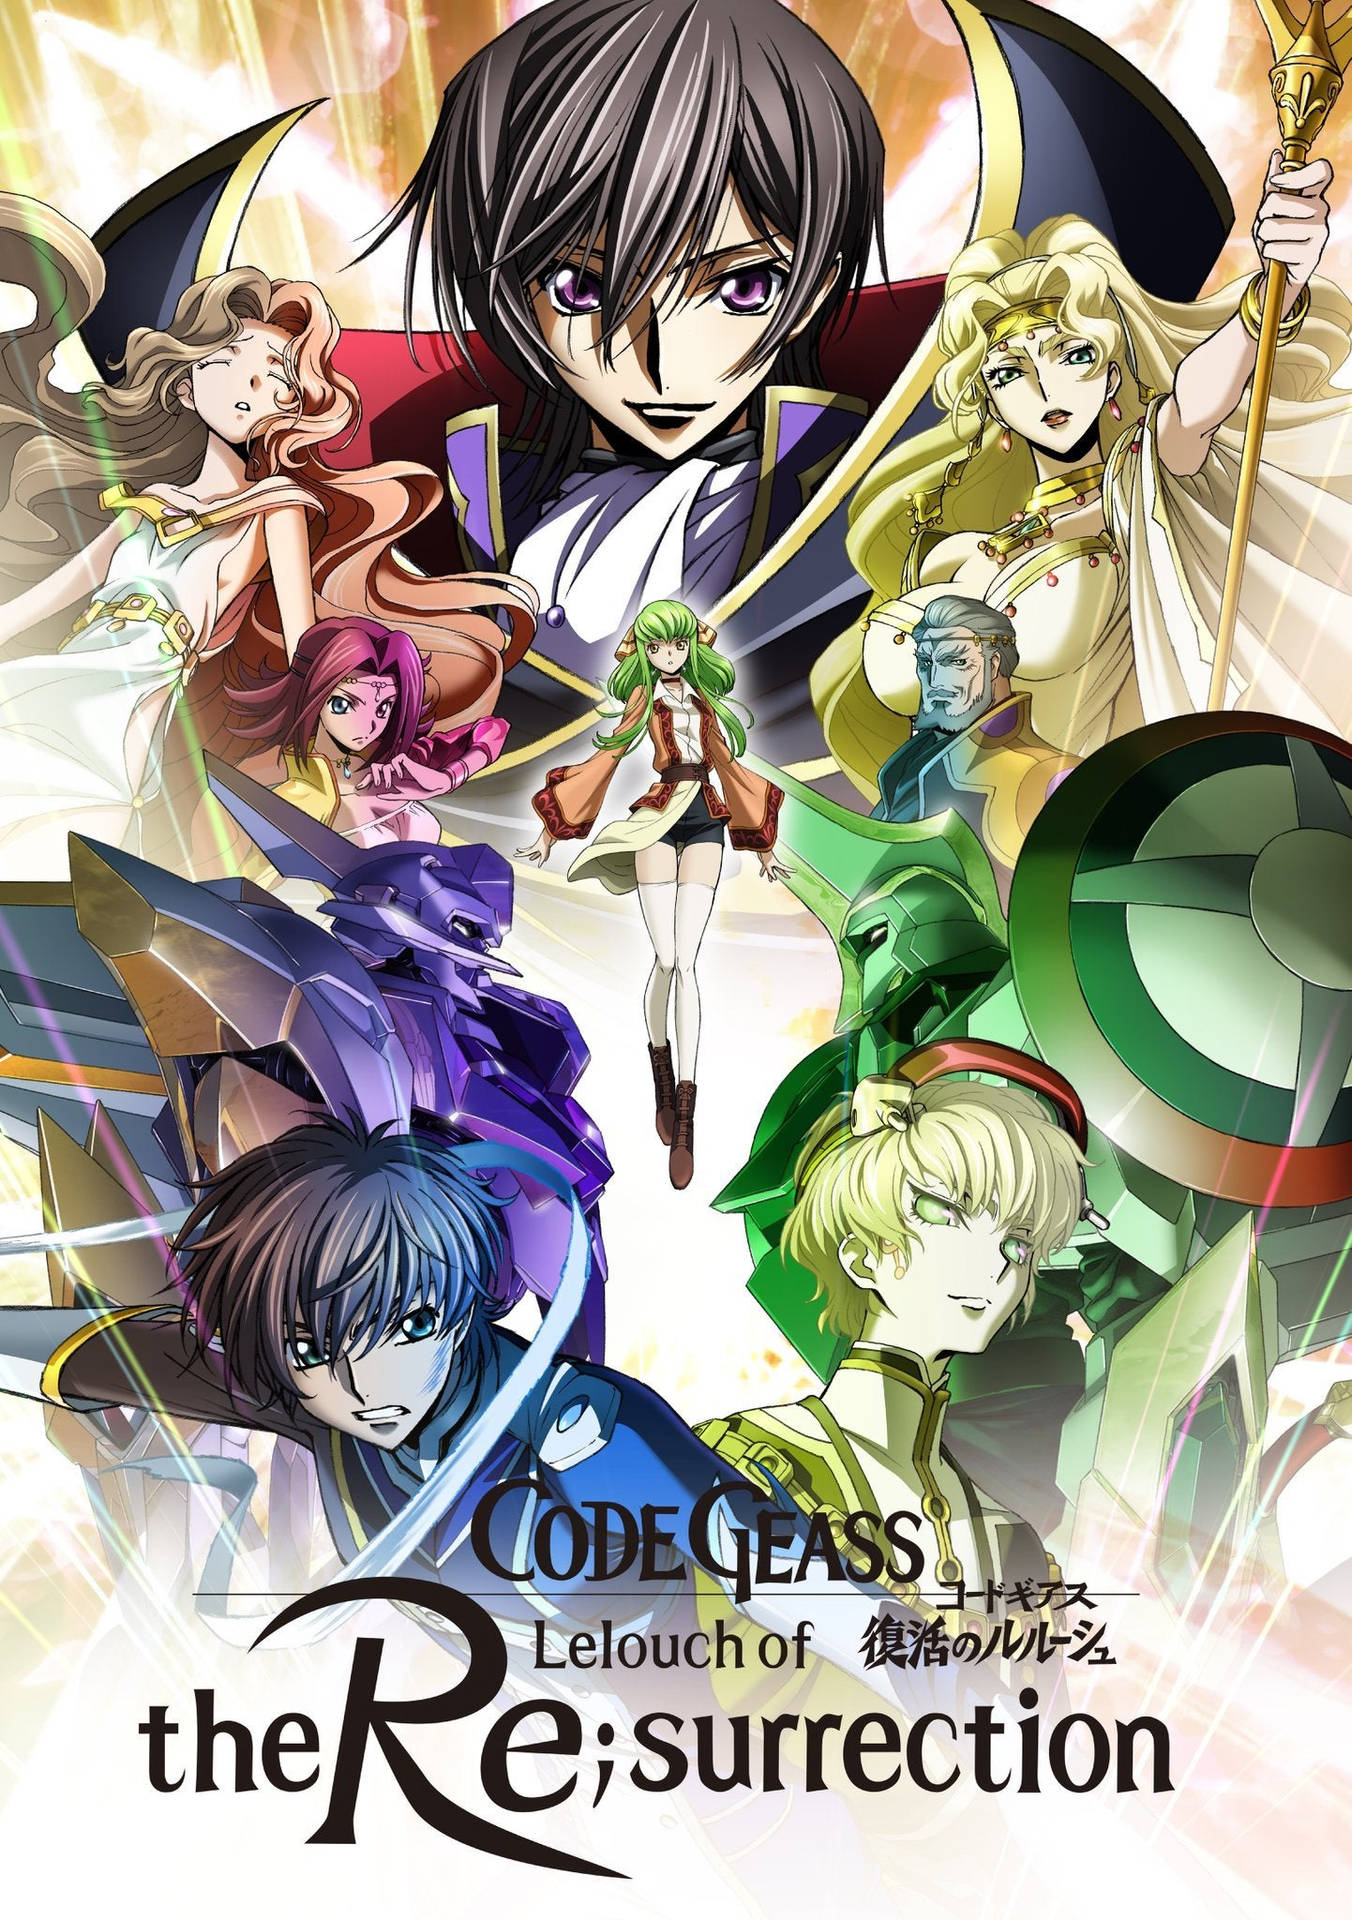 Protagonists Of Code Geass Anime Series In Intense Battle Scene Wallpaper